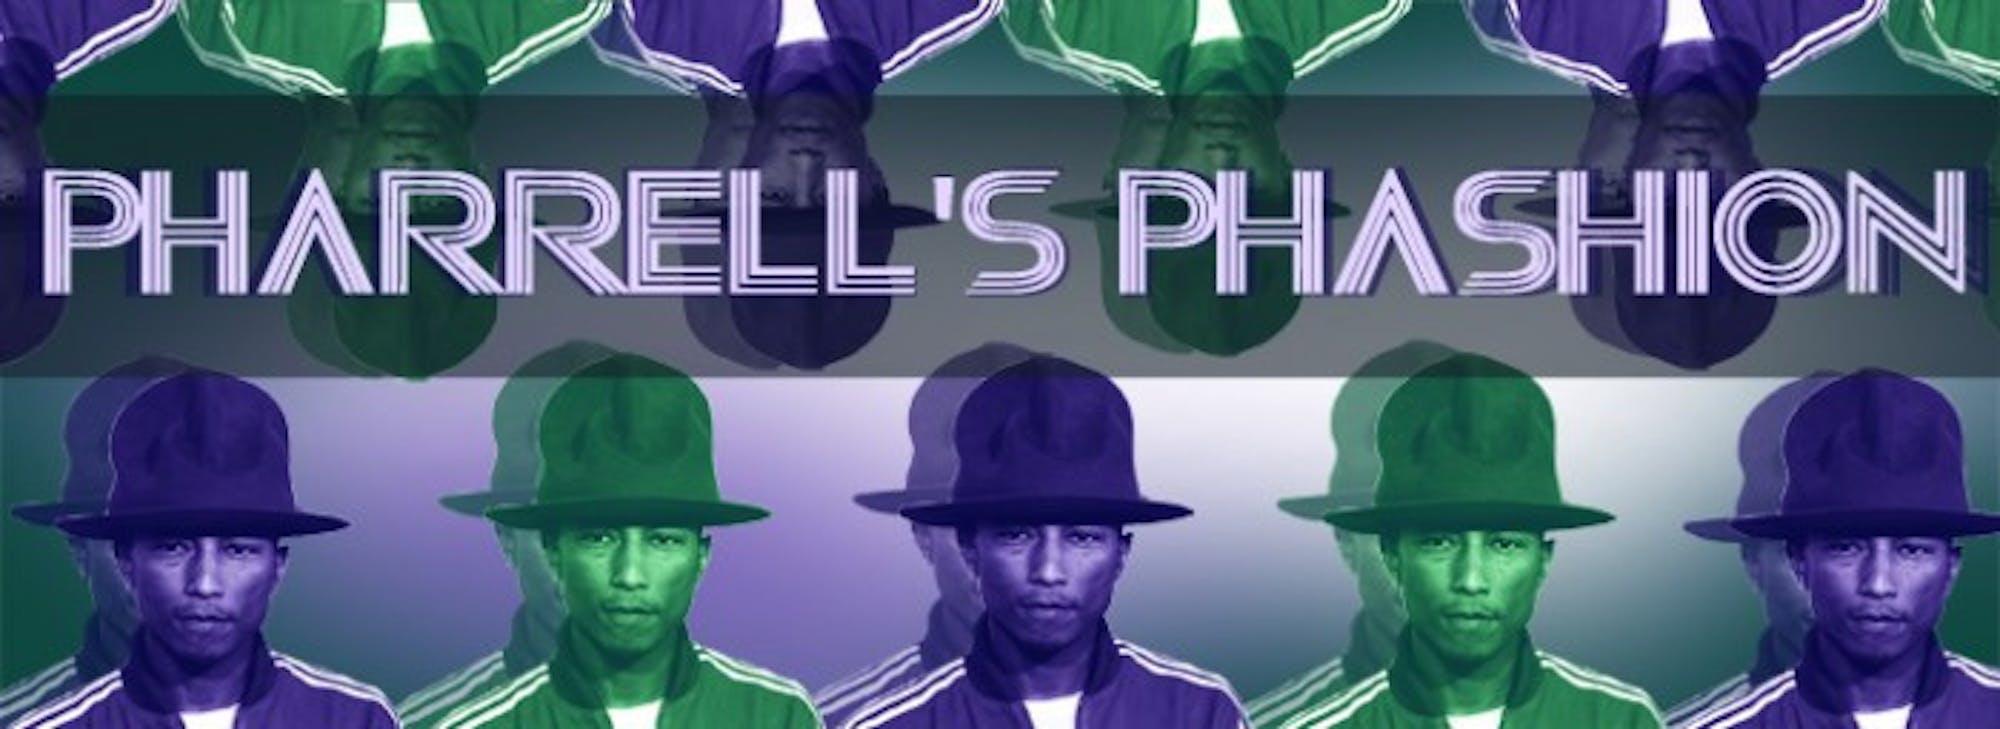 pharrell graphic WEB1